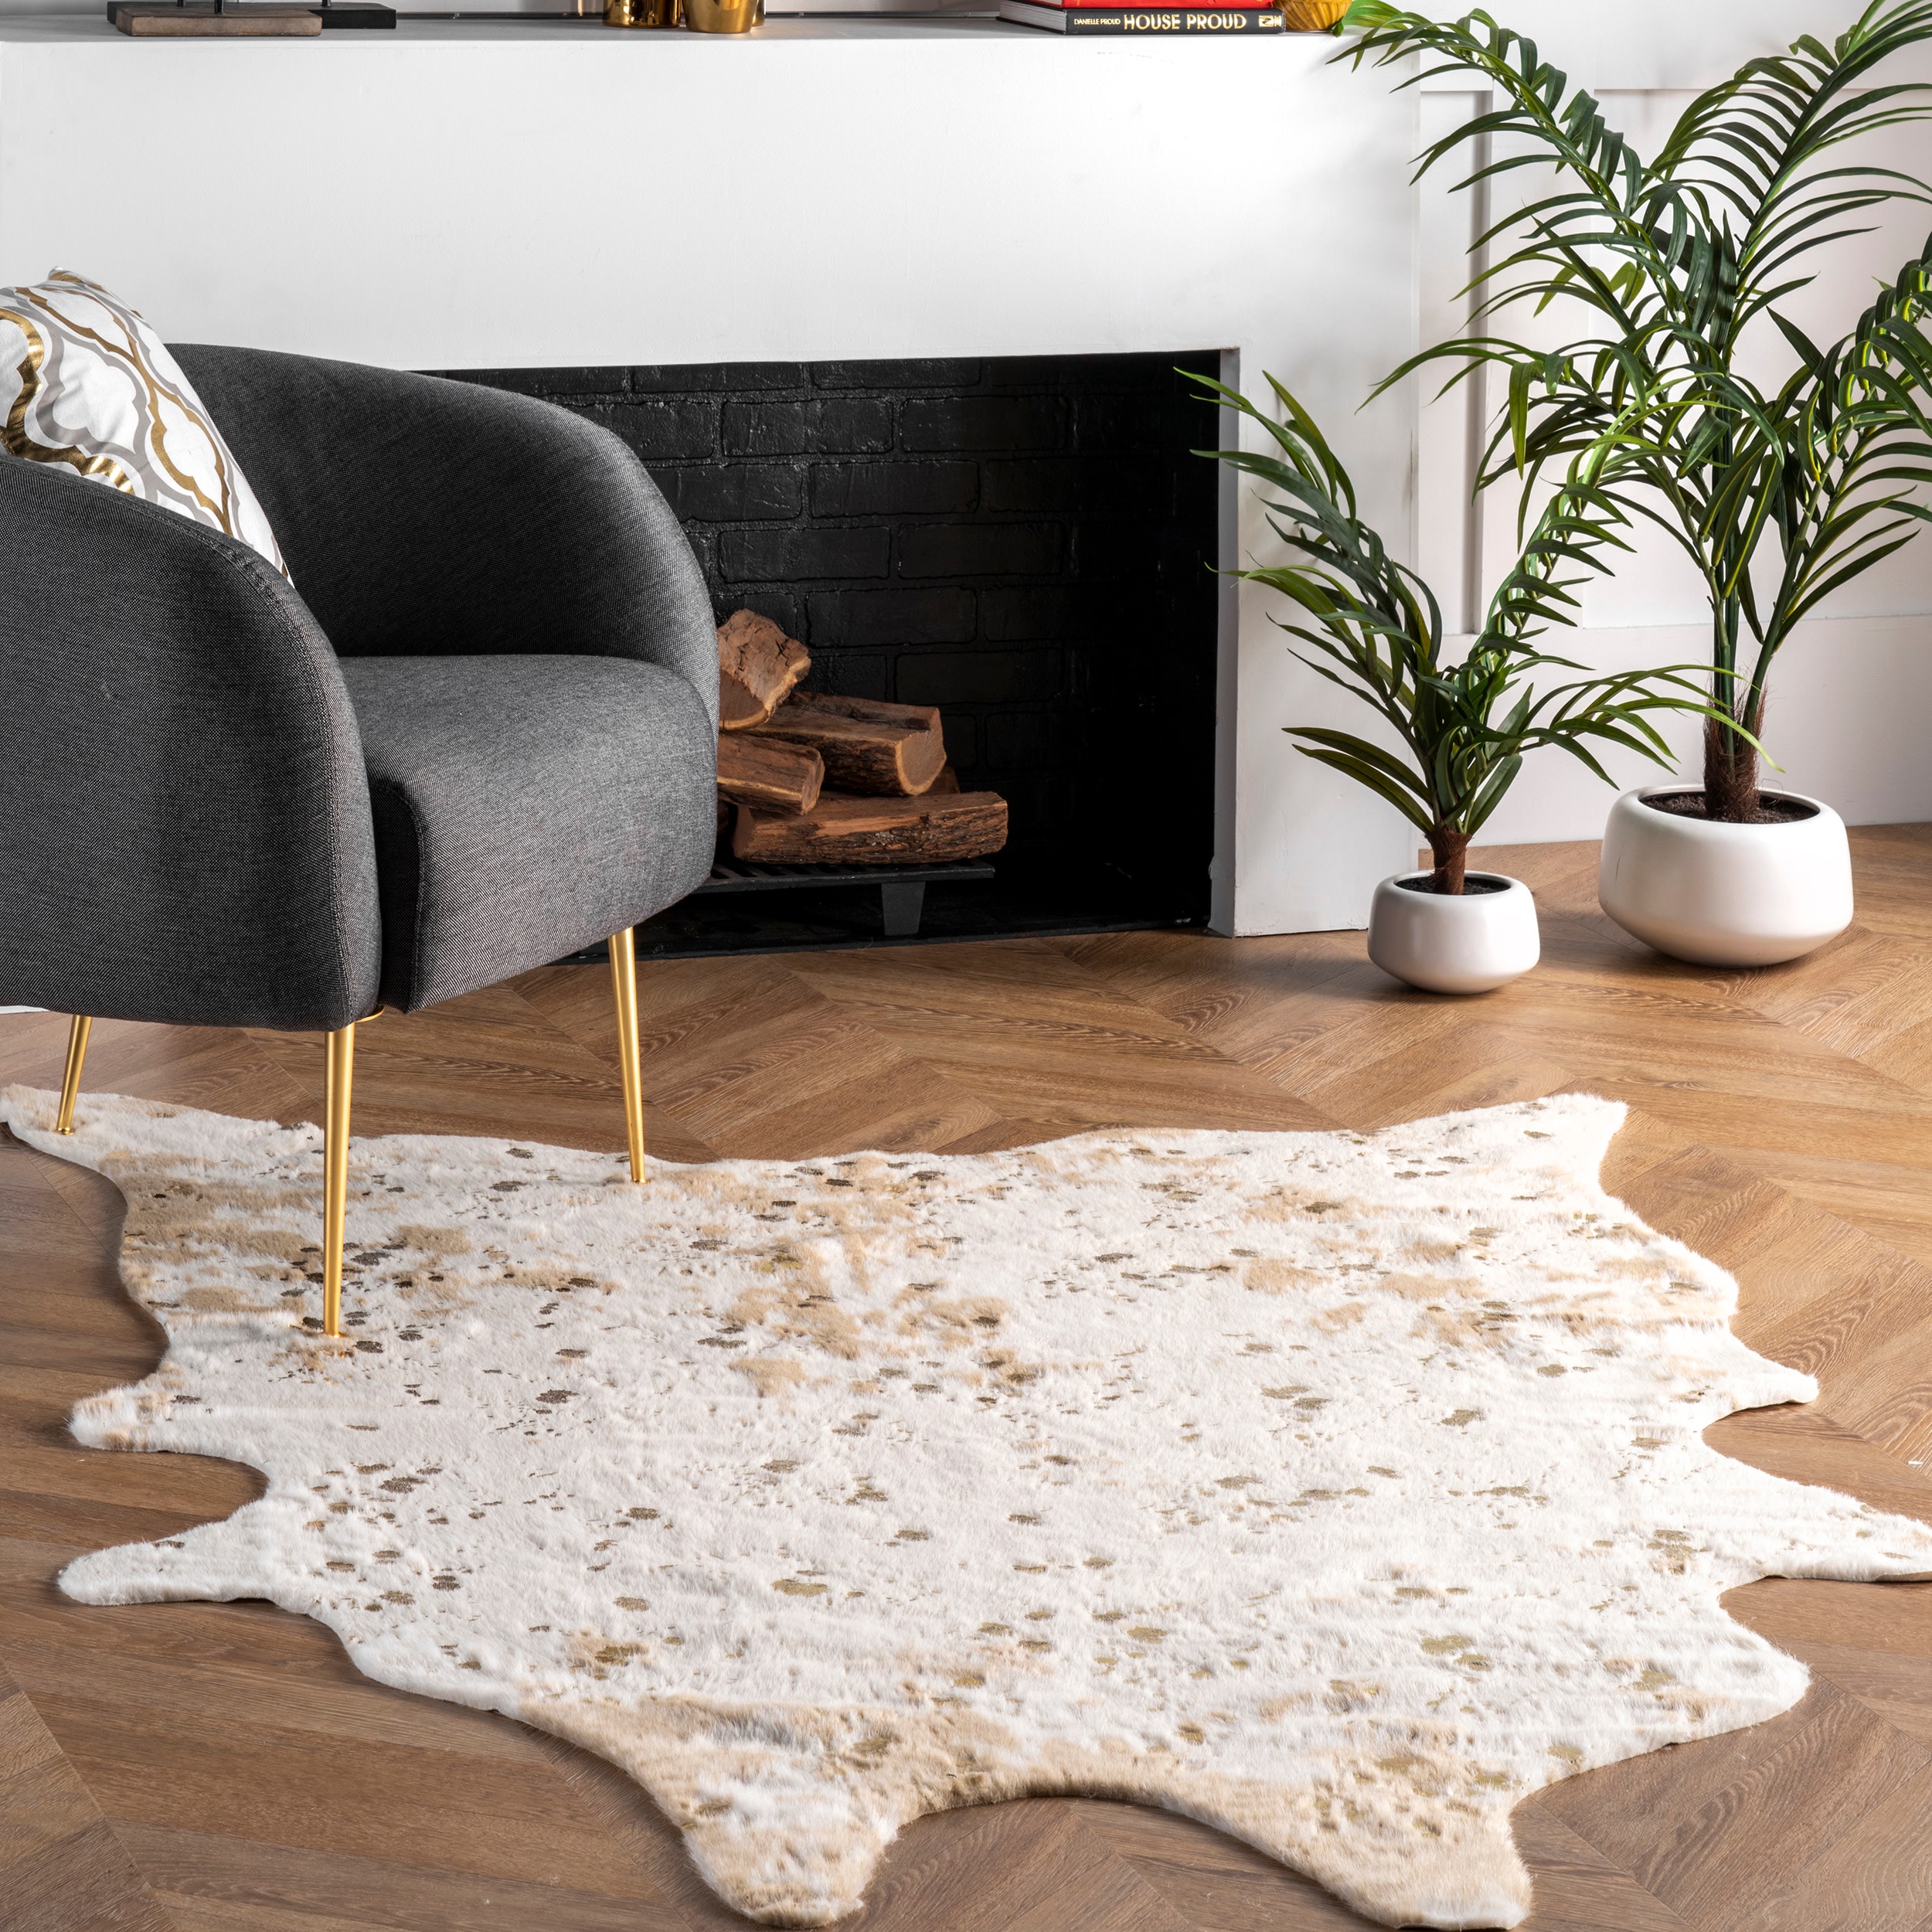 AANVII Animals Area Rug Non-Slip Floor Carpet for Bedroom Home Decoration